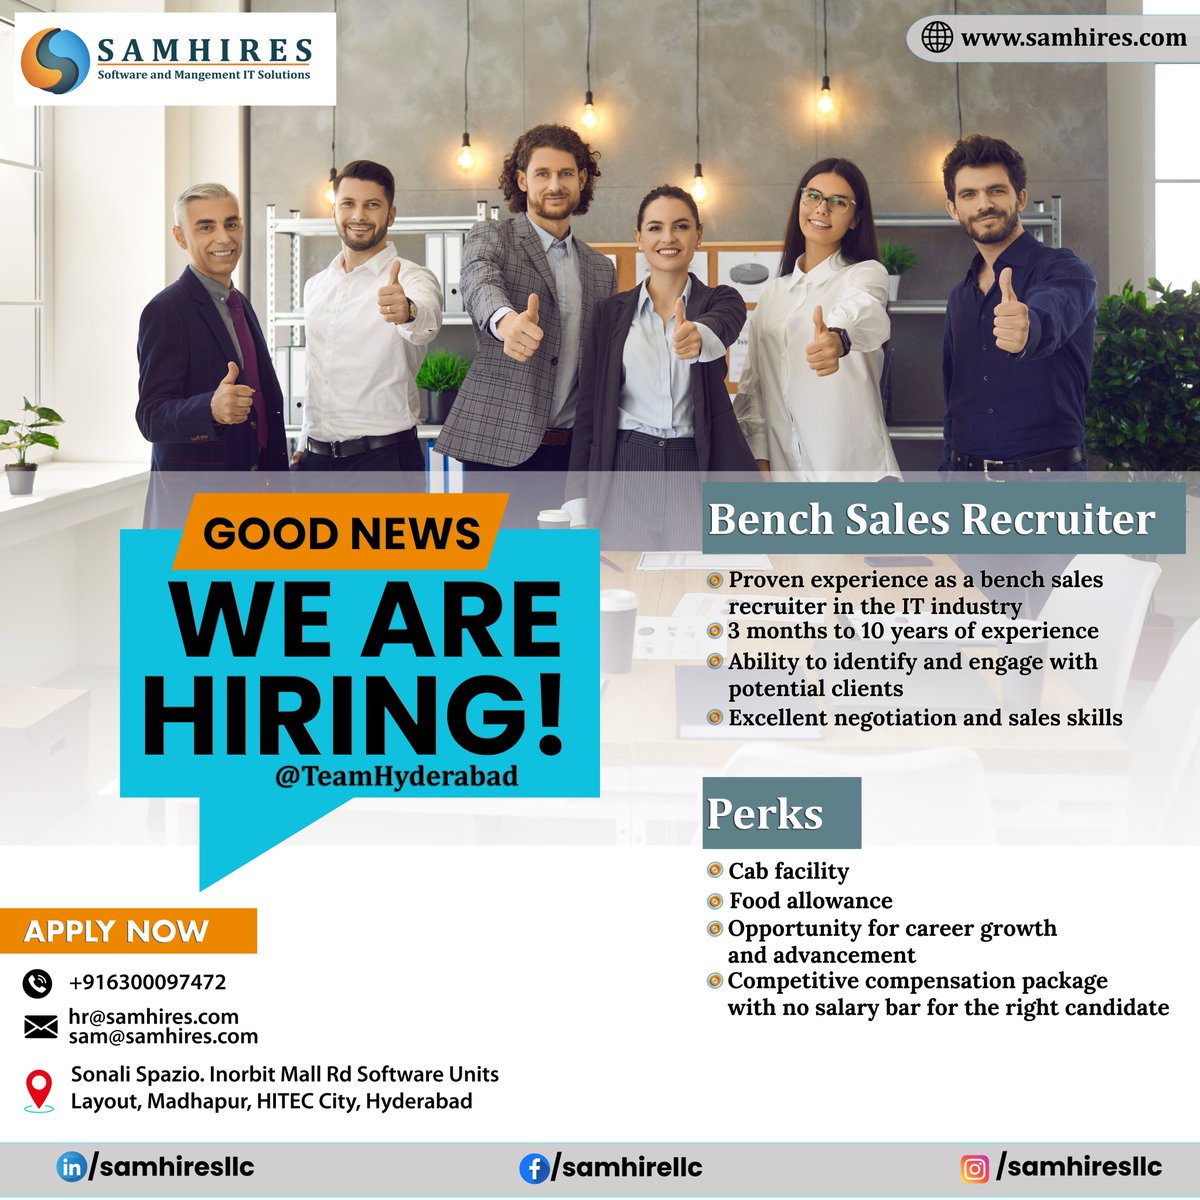 𝐉𝐨𝐢𝐧 𝐒𝐚𝐦𝐡𝐢𝐫𝐞𝐬 𝐋𝐋𝐂 𝐚𝐬 𝐚 𝐁𝐞𝐧𝐜𝐡 𝐒𝐚𝐥𝐞𝐬 𝐑𝐞𝐜𝐫𝐮𝐢𝐭𝐞𝐫 𝐢𝐧 𝐇𝐲𝐝𝐞𝐫𝐚𝐛𝐚𝐝!

#SamhiresLLC #JobOpening #BenchSalesRecruiter #ITIndustry #HyderabadJobs #CareerOpportunity #SalesRecruiter #NowHiring #JoinOurTeam #Recruitment #JobSearch